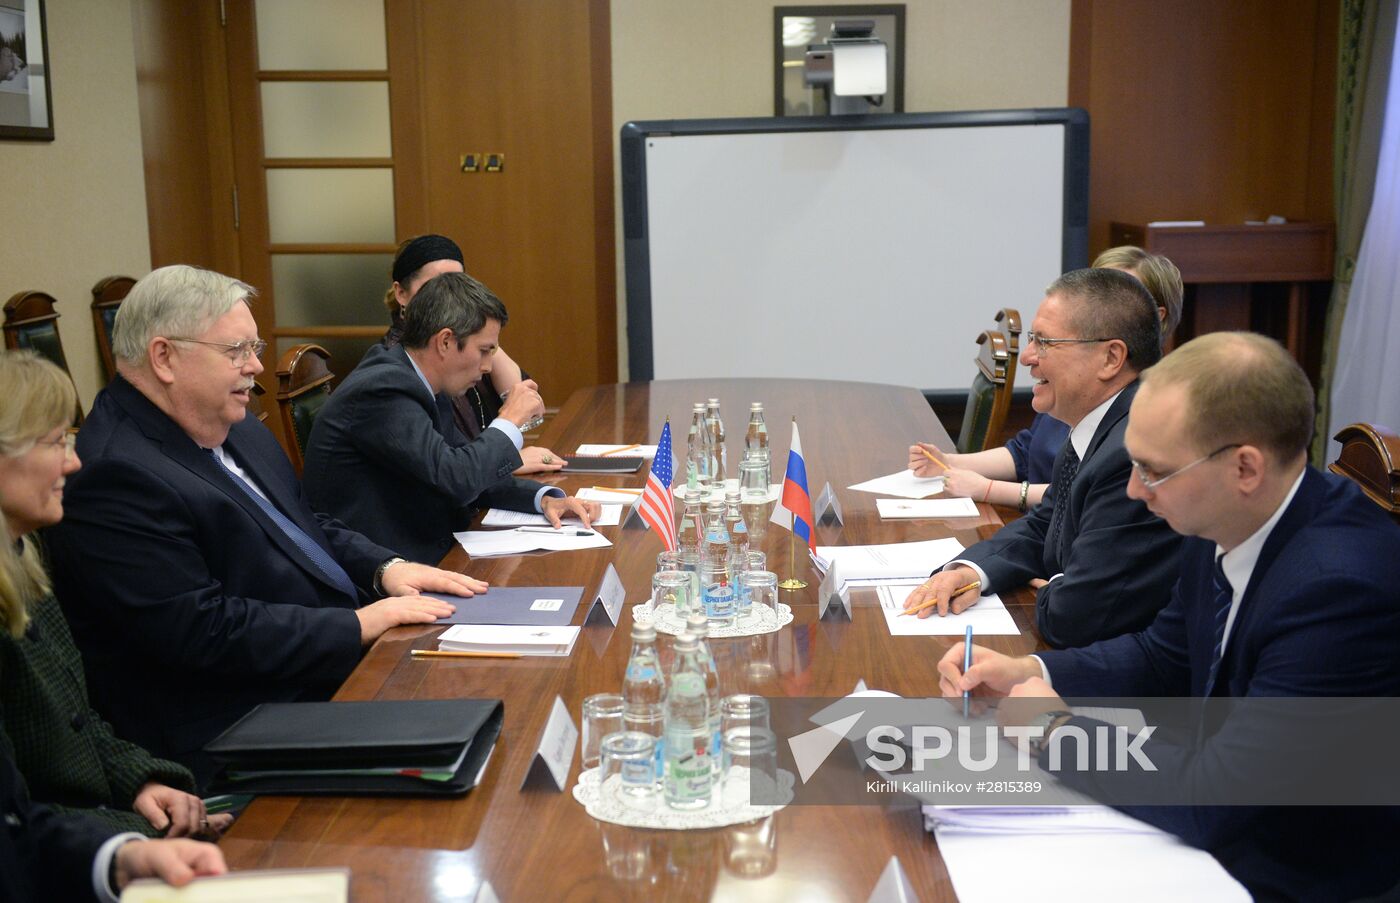 Russian Economic Development Minister Aleksei Ulyukaev meets with US Ambassador John Tefft